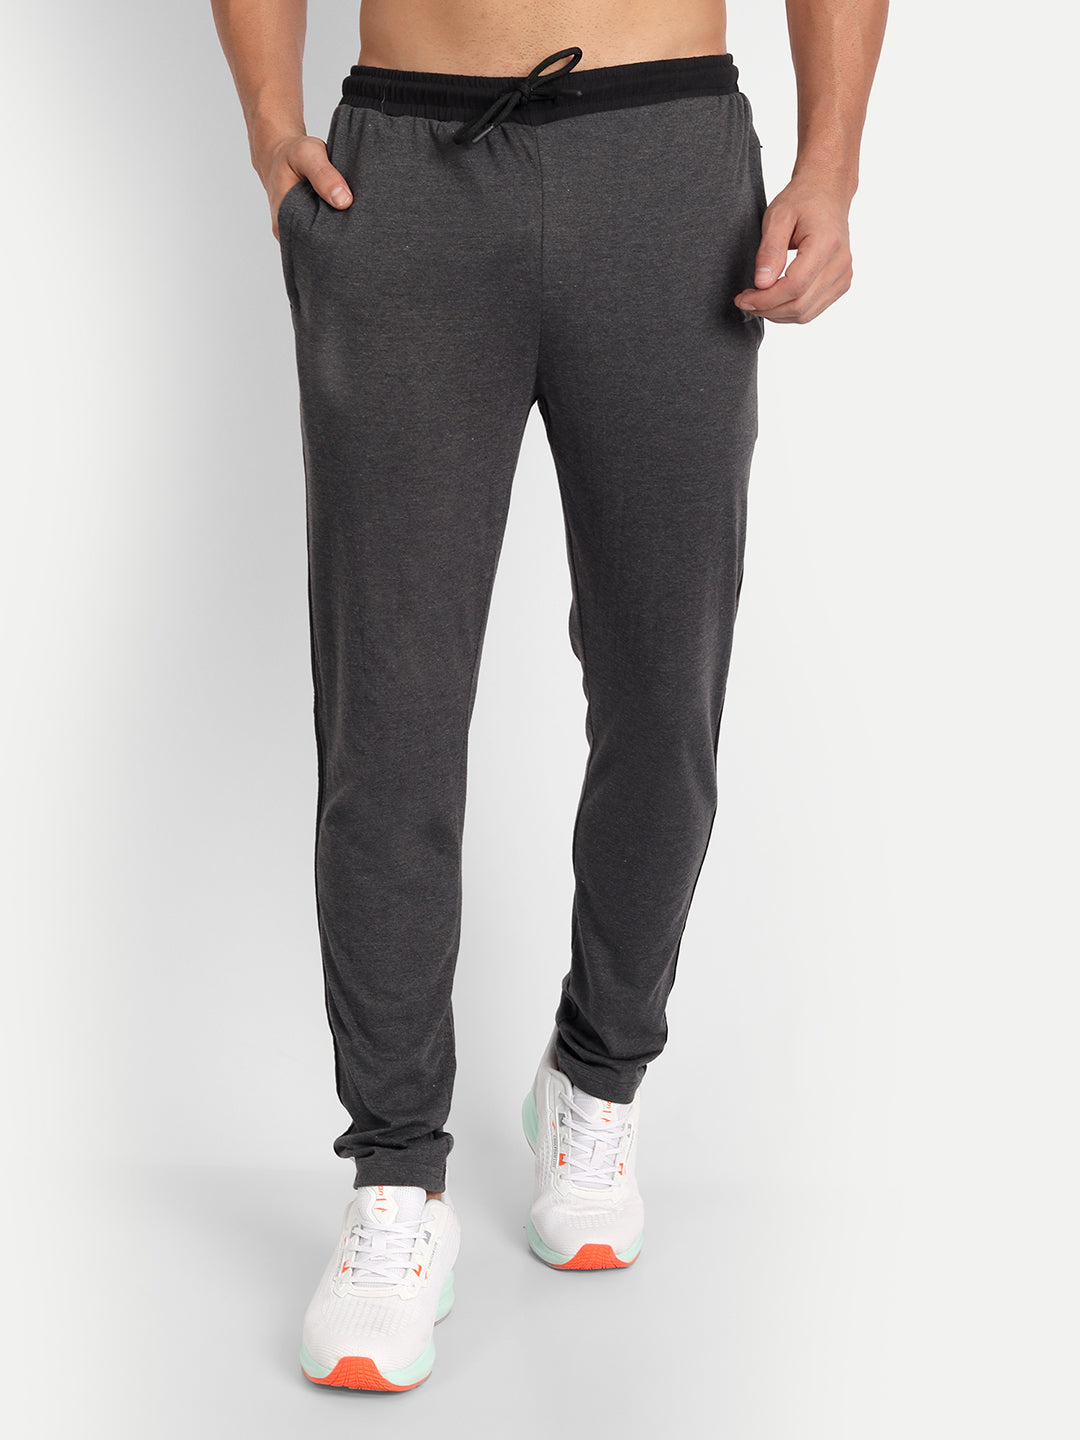 Hugo Boss Medium Grey Exclusive Logo Cotton-Blend Track Pants, Size Large  50463564-030 - Apparel - Jomashop